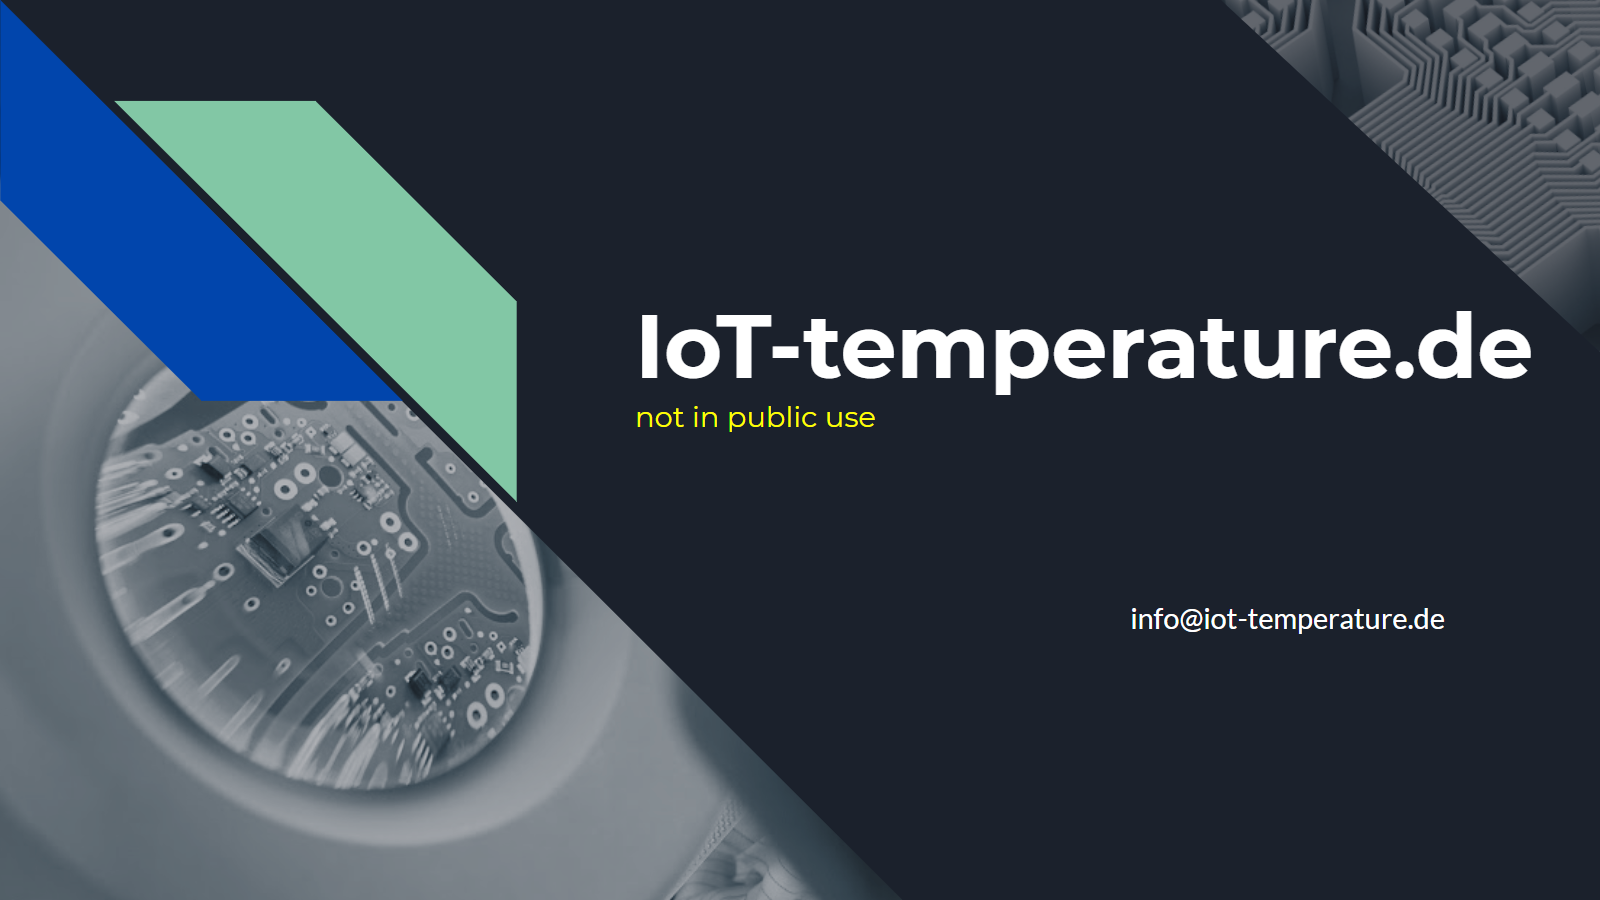 iot-temperature.de - using cutting edge of technology - 365/24